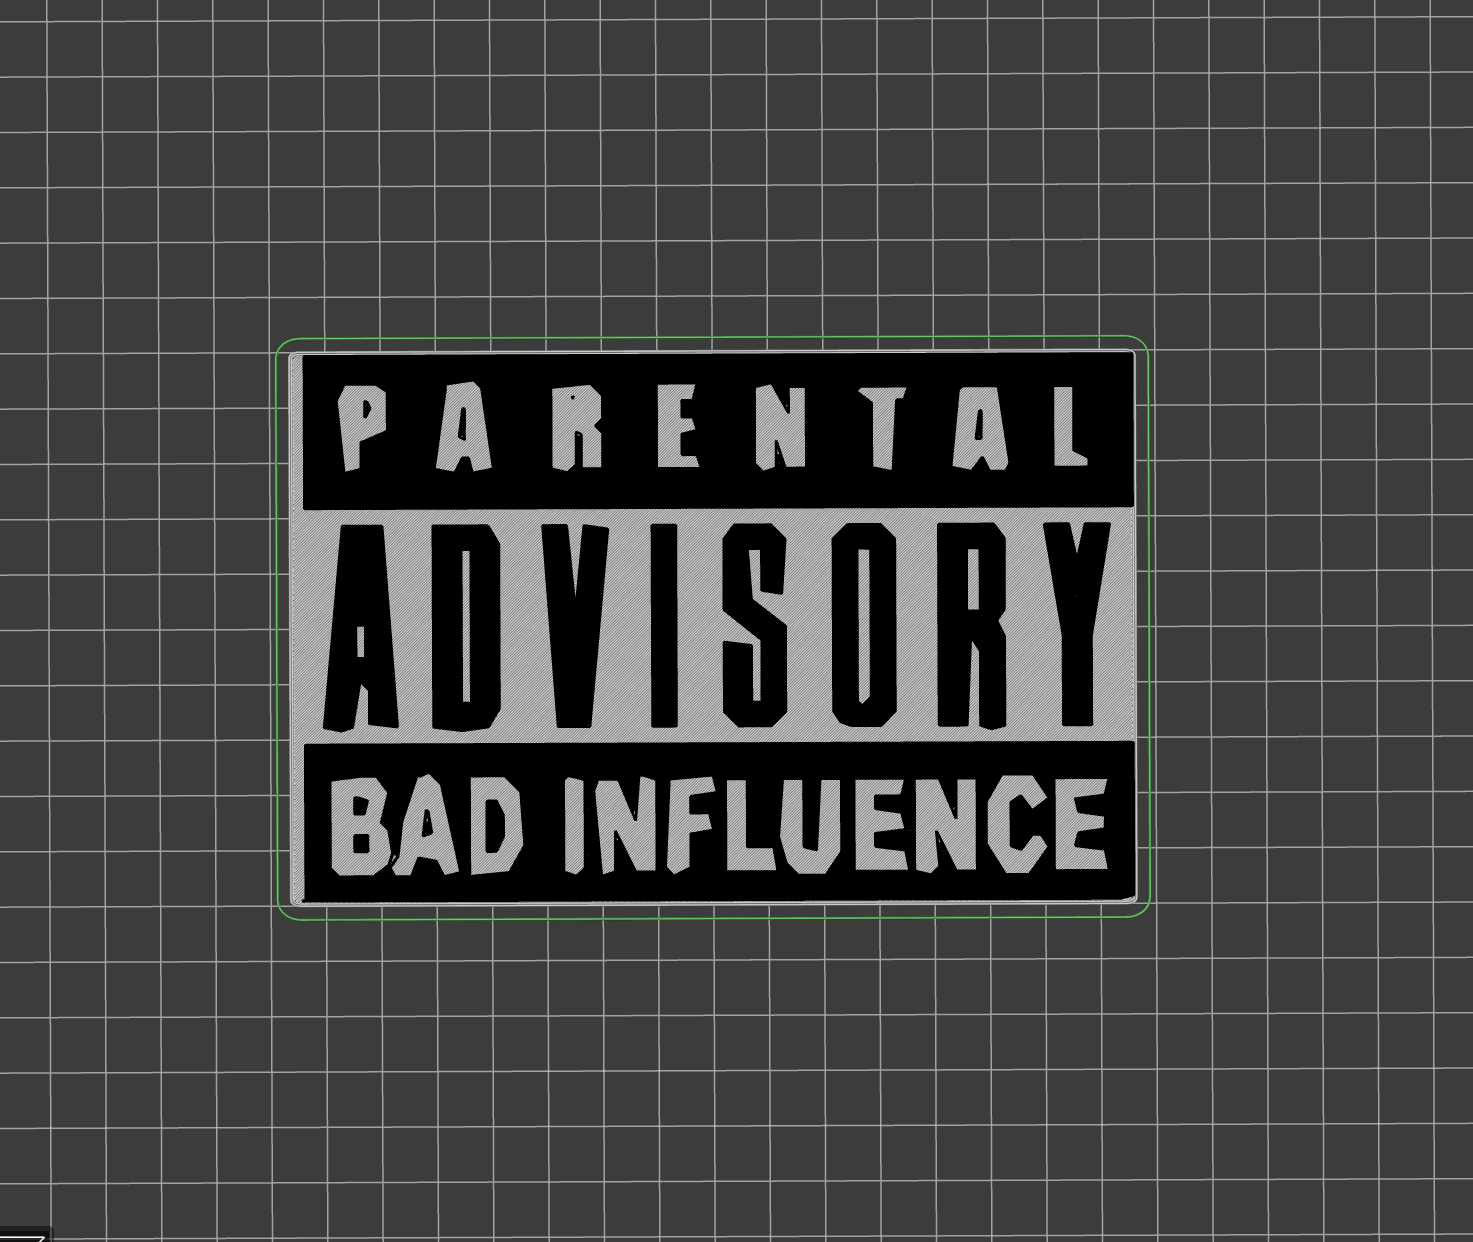 Parental advisory: bad influence - wall sign